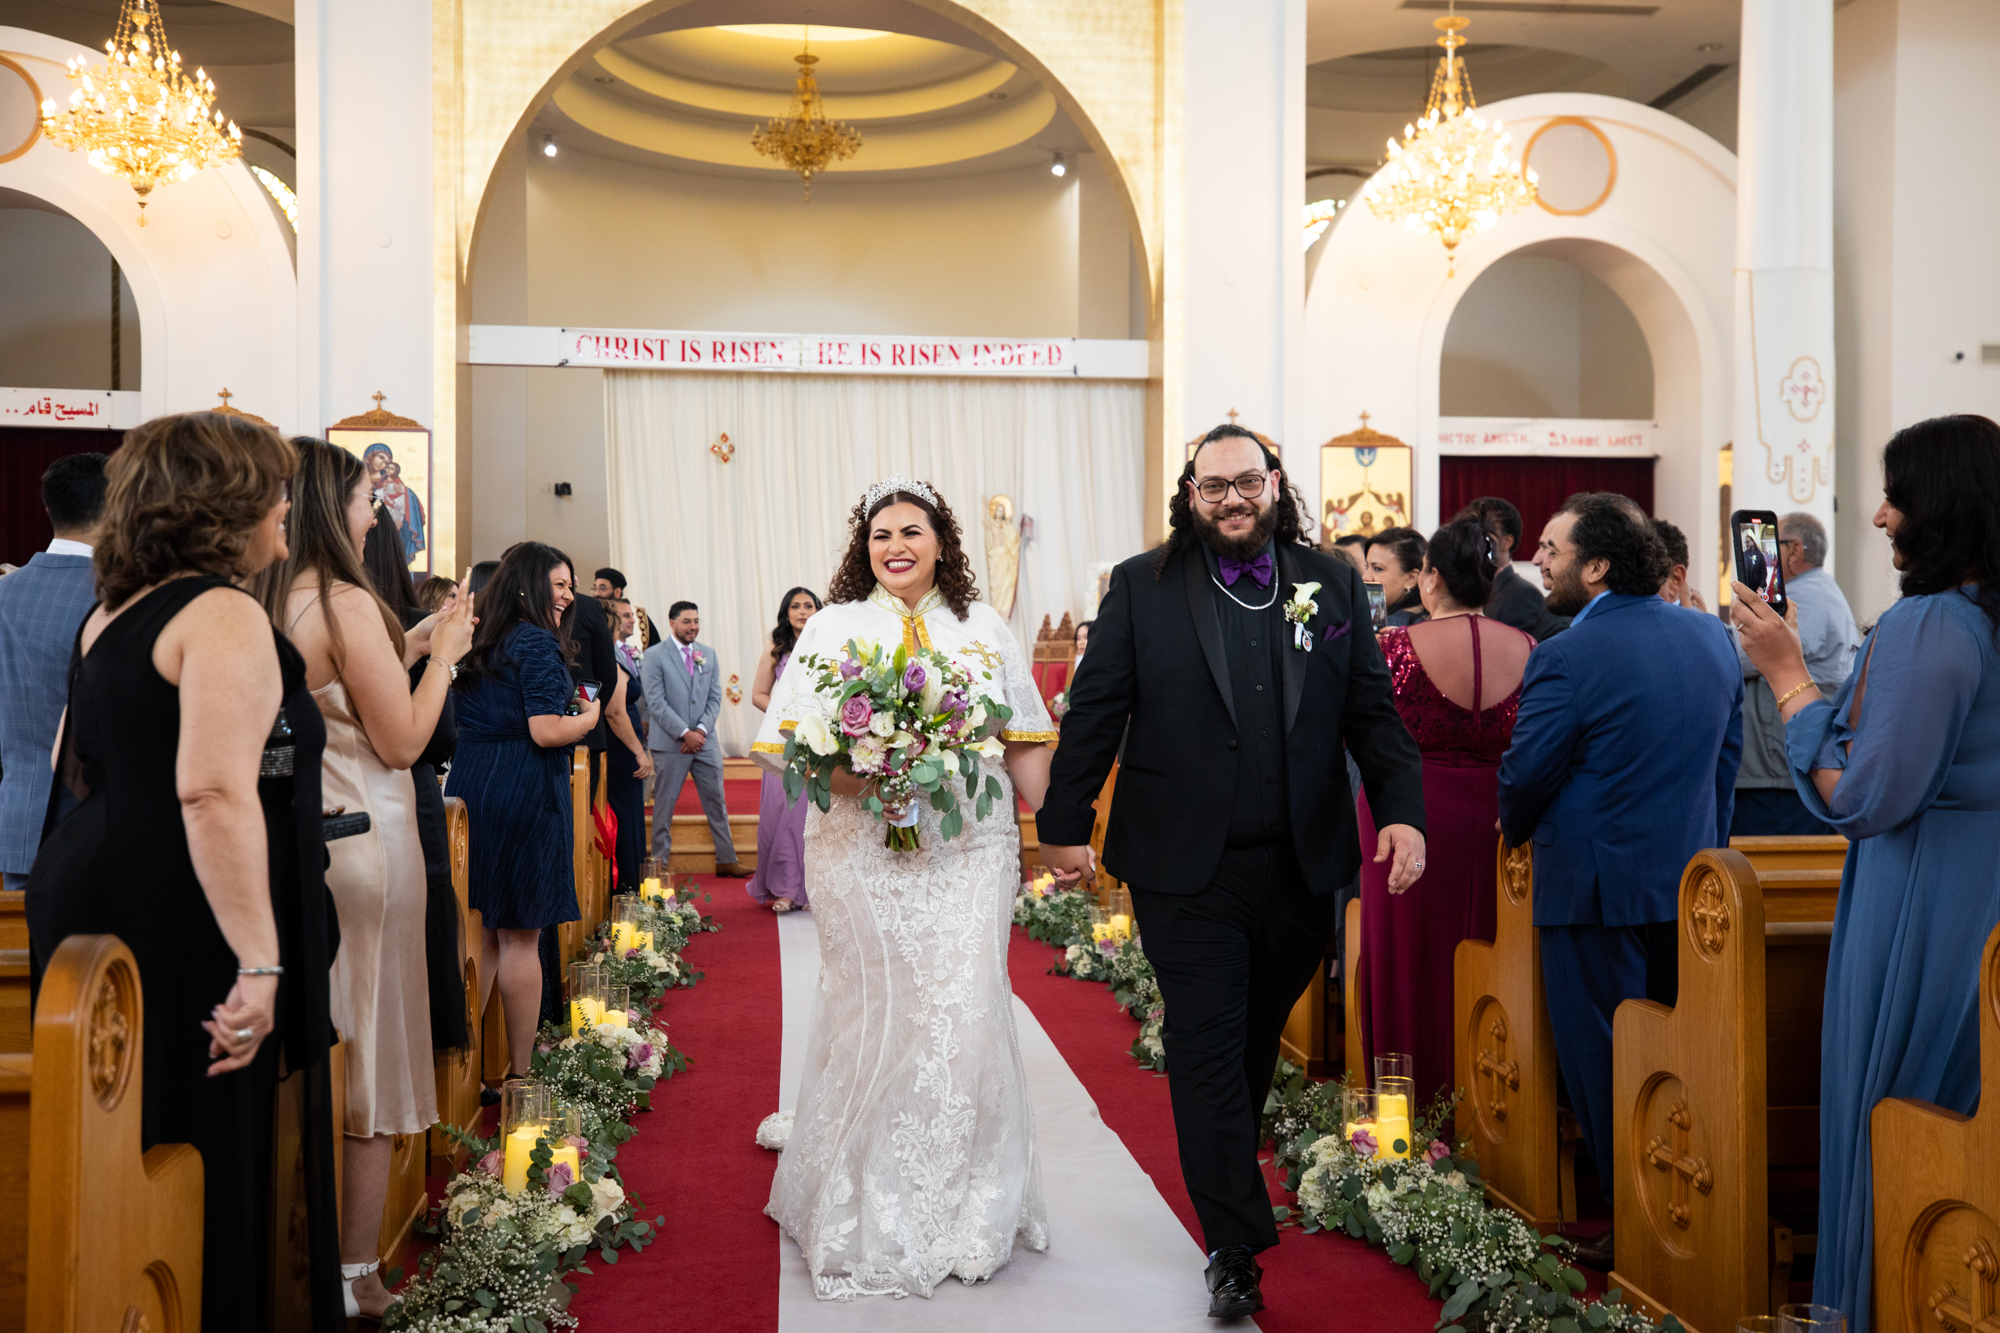 Wedding Ceremony at St. John Coptic Orthodox Church in Covina